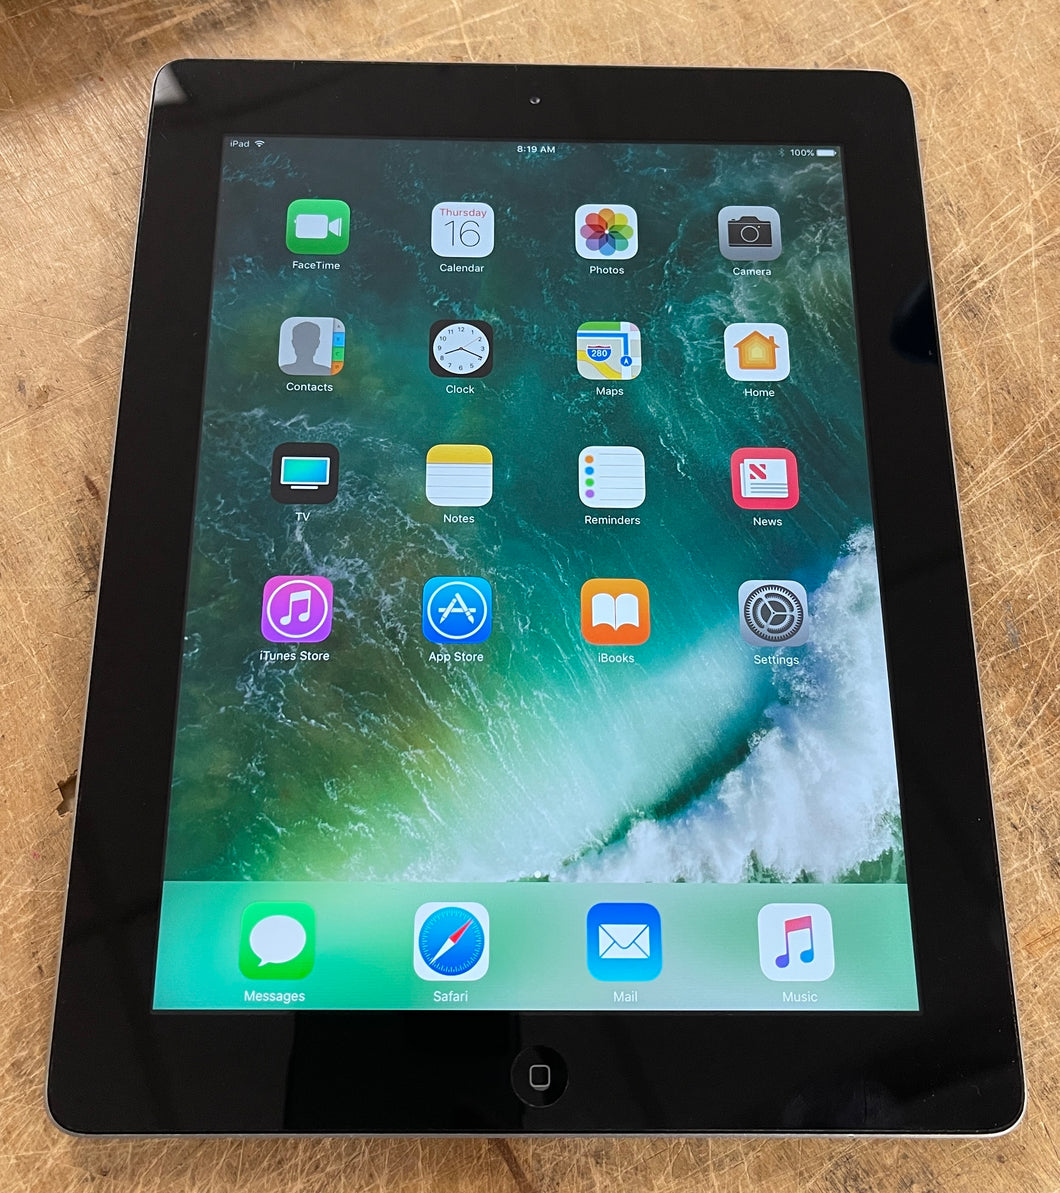 Apple iPad 4th Gen (Wi-Fi Only) 1.4GHz Dual-Core Apple A6X 32GB (MD511LL/A)